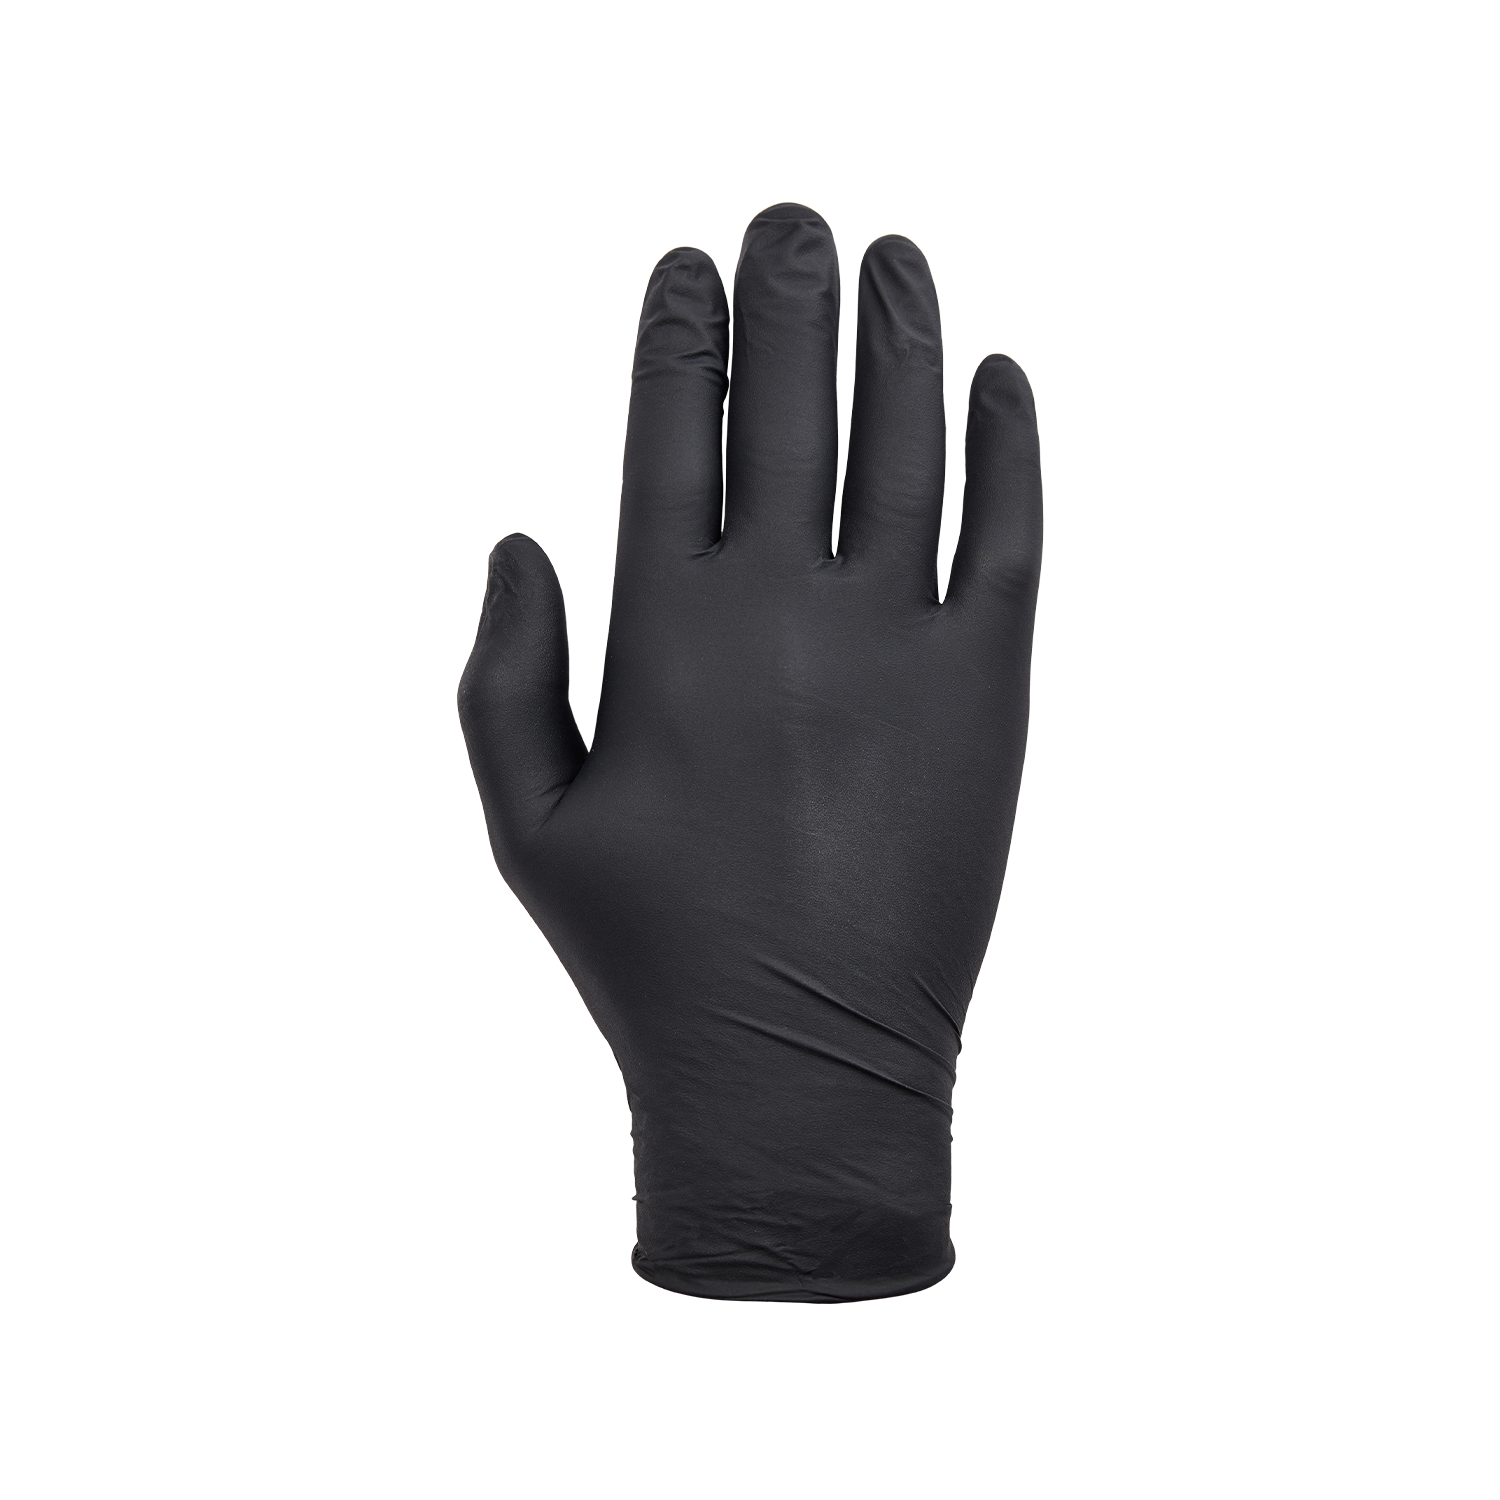 NORSE Disposable Black Black disposable nitrile gloves - size 8/M